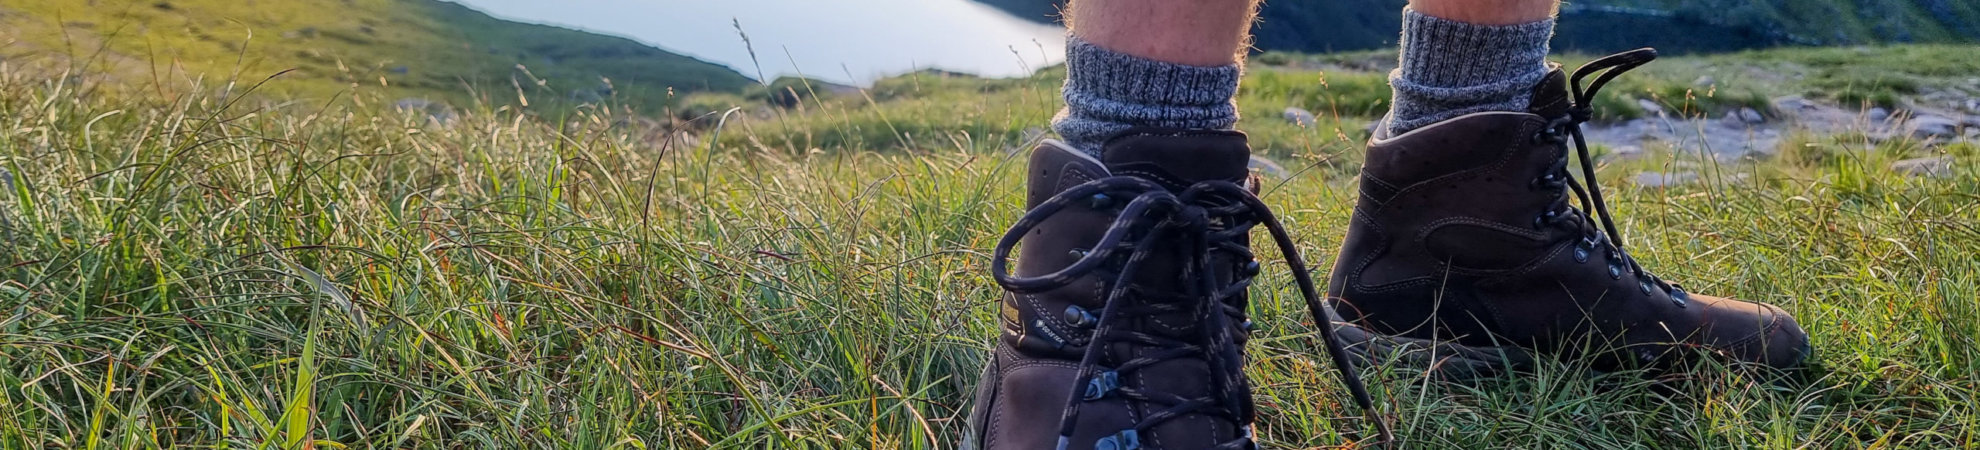 Hiking boots on Carrauntoohill